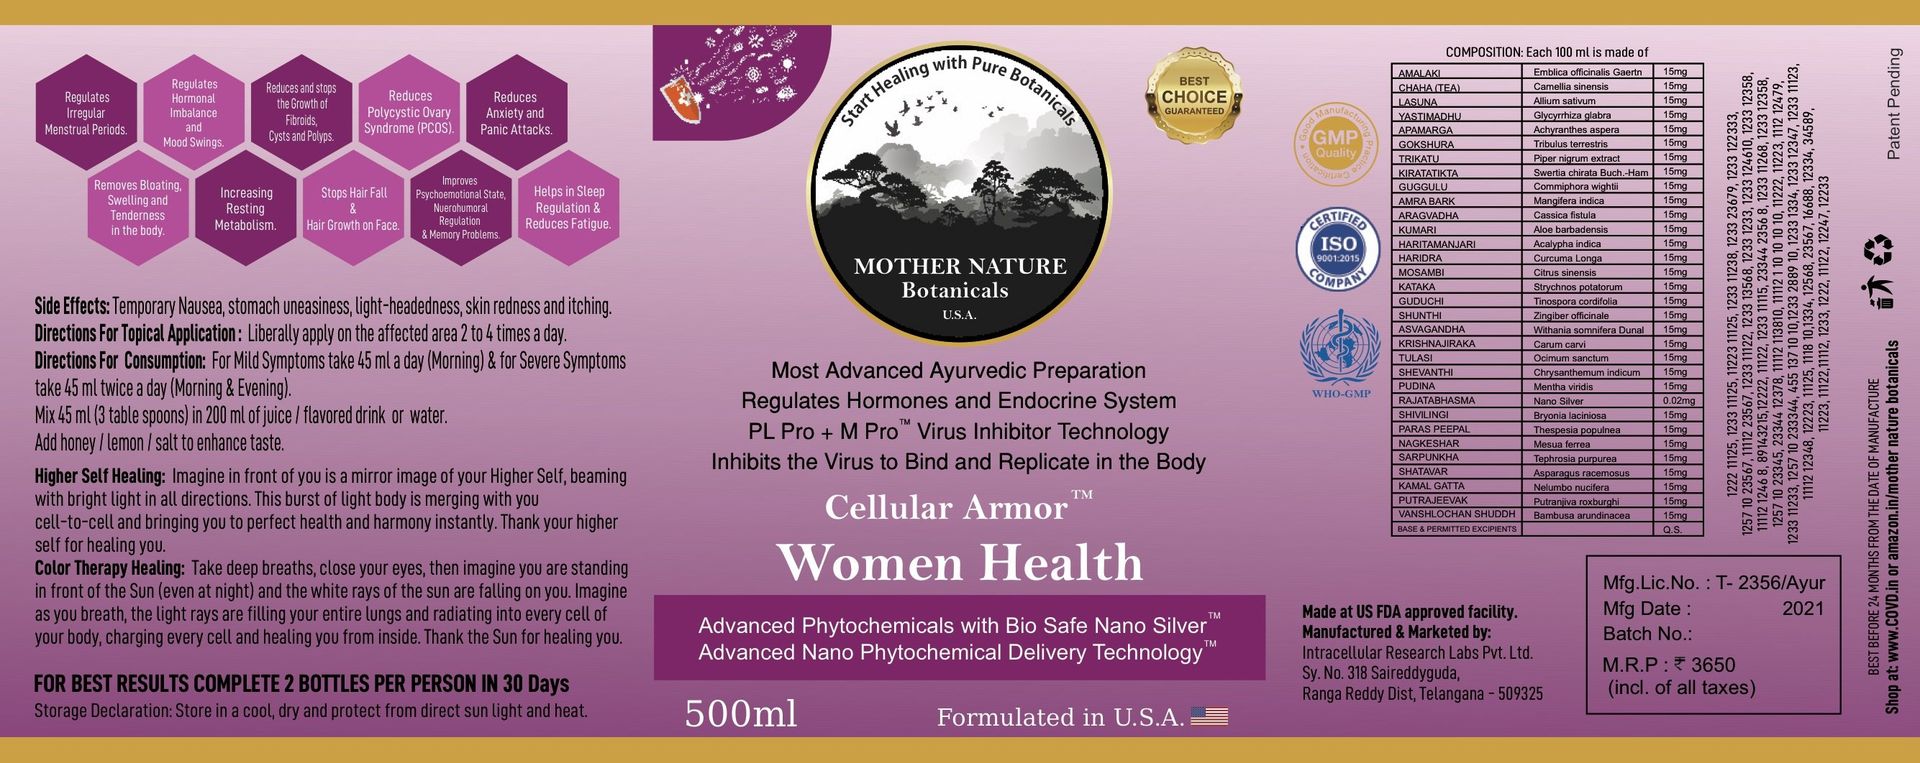 Mother Nature Botanical's Women Health - hfnl!fe